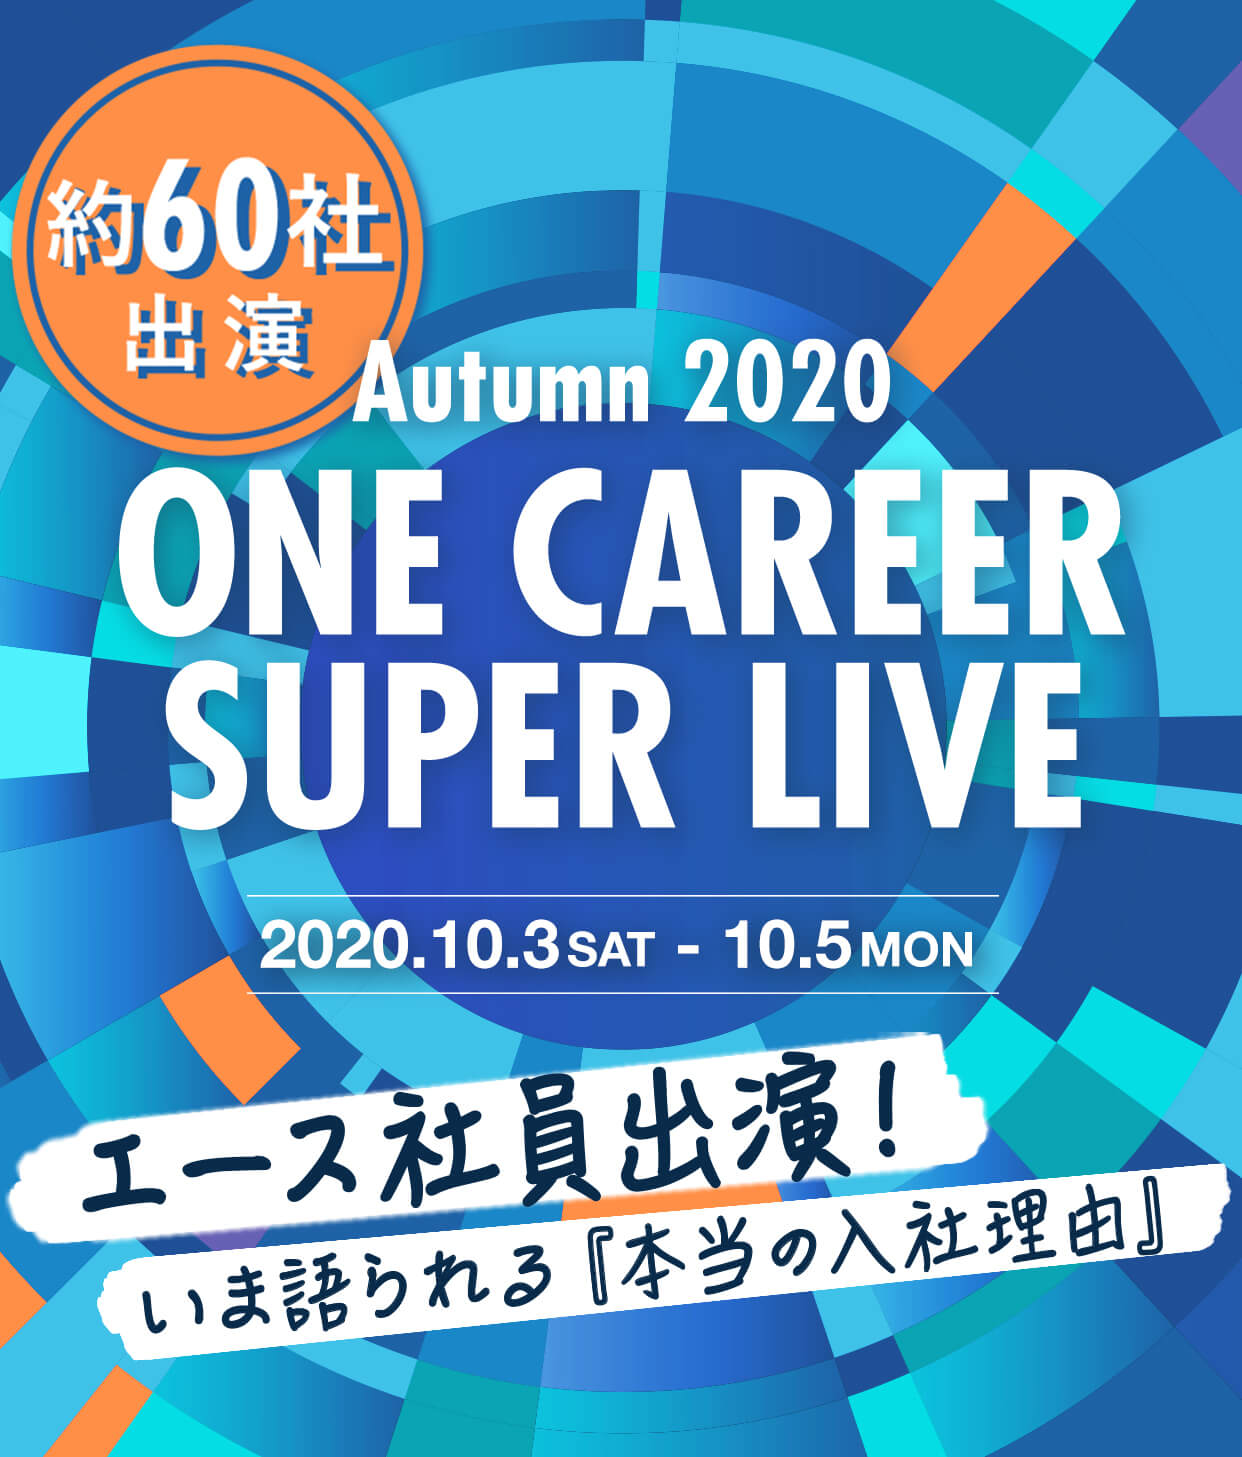 ONE CAREER SUPER LIVE Autumn 2020